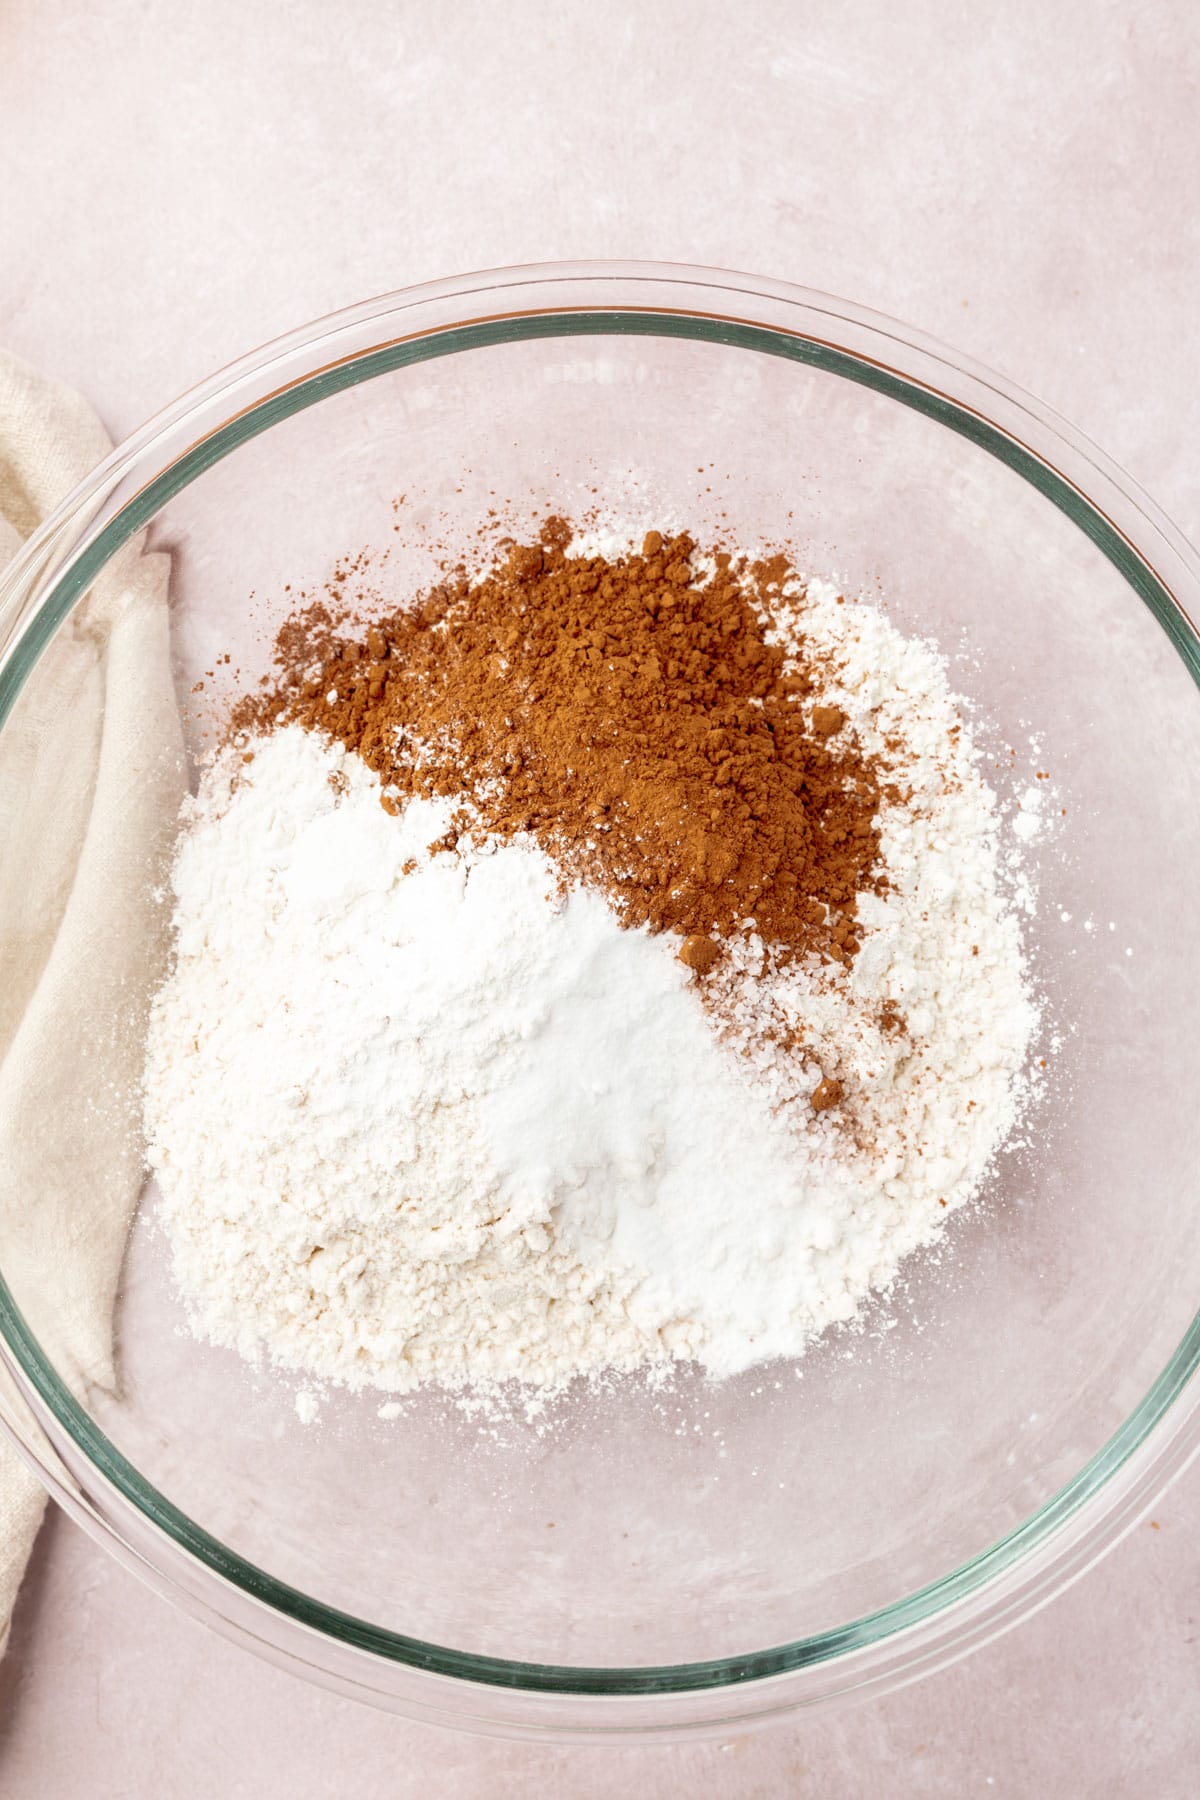 Gluten-free flour, cocoa powder, cornstarch, baking powder, and baking soda in a glass mixing bowl.